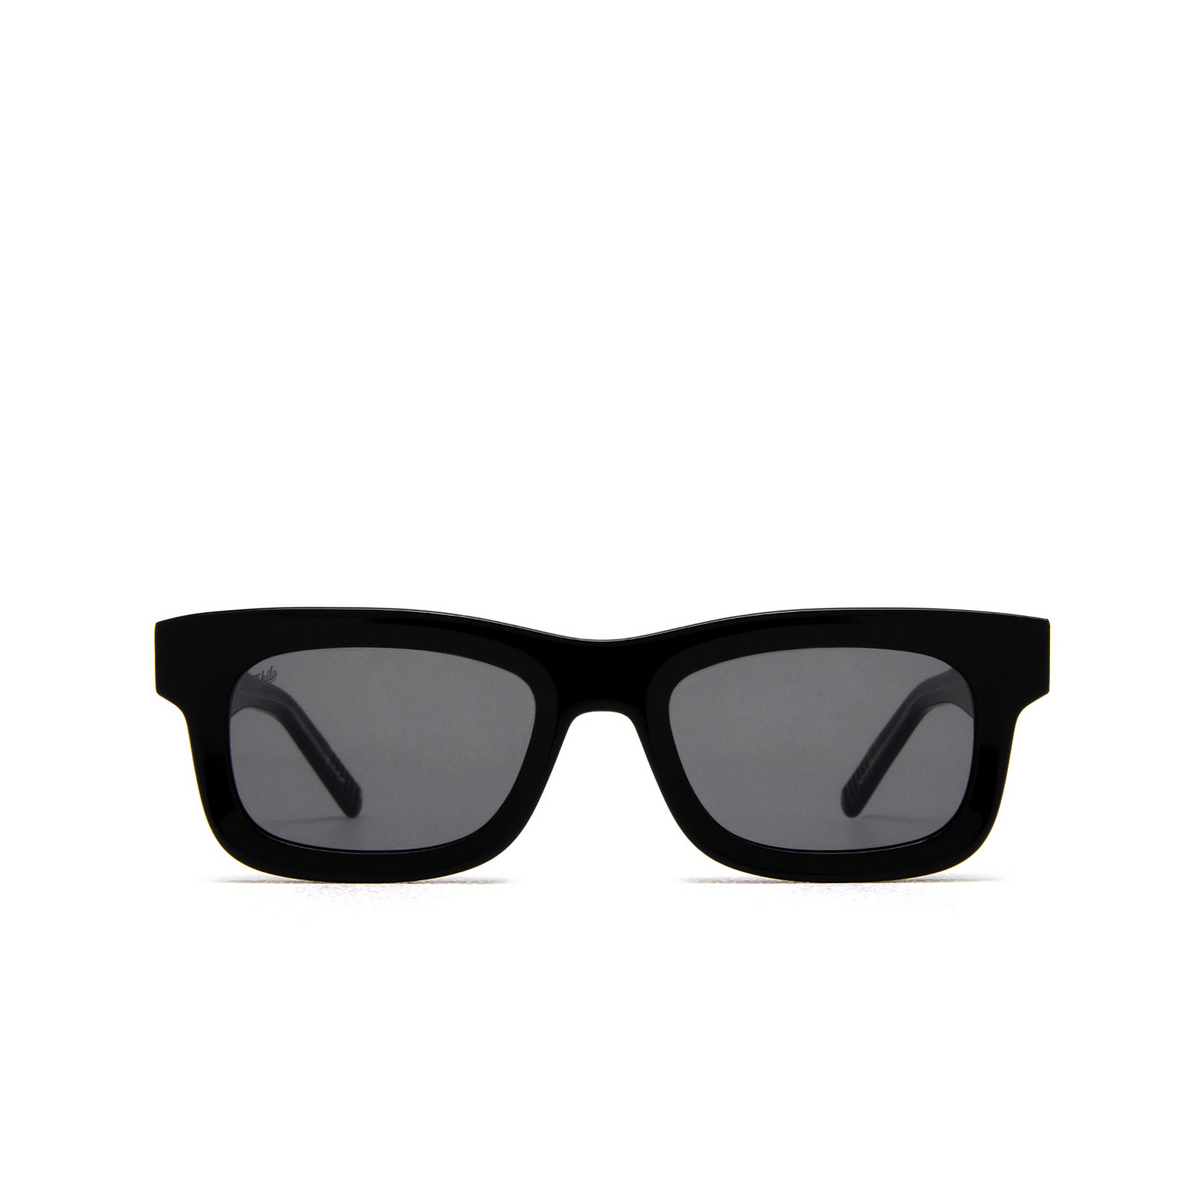 Akila JUBILEE Sunglasses 01/01 Black - front view